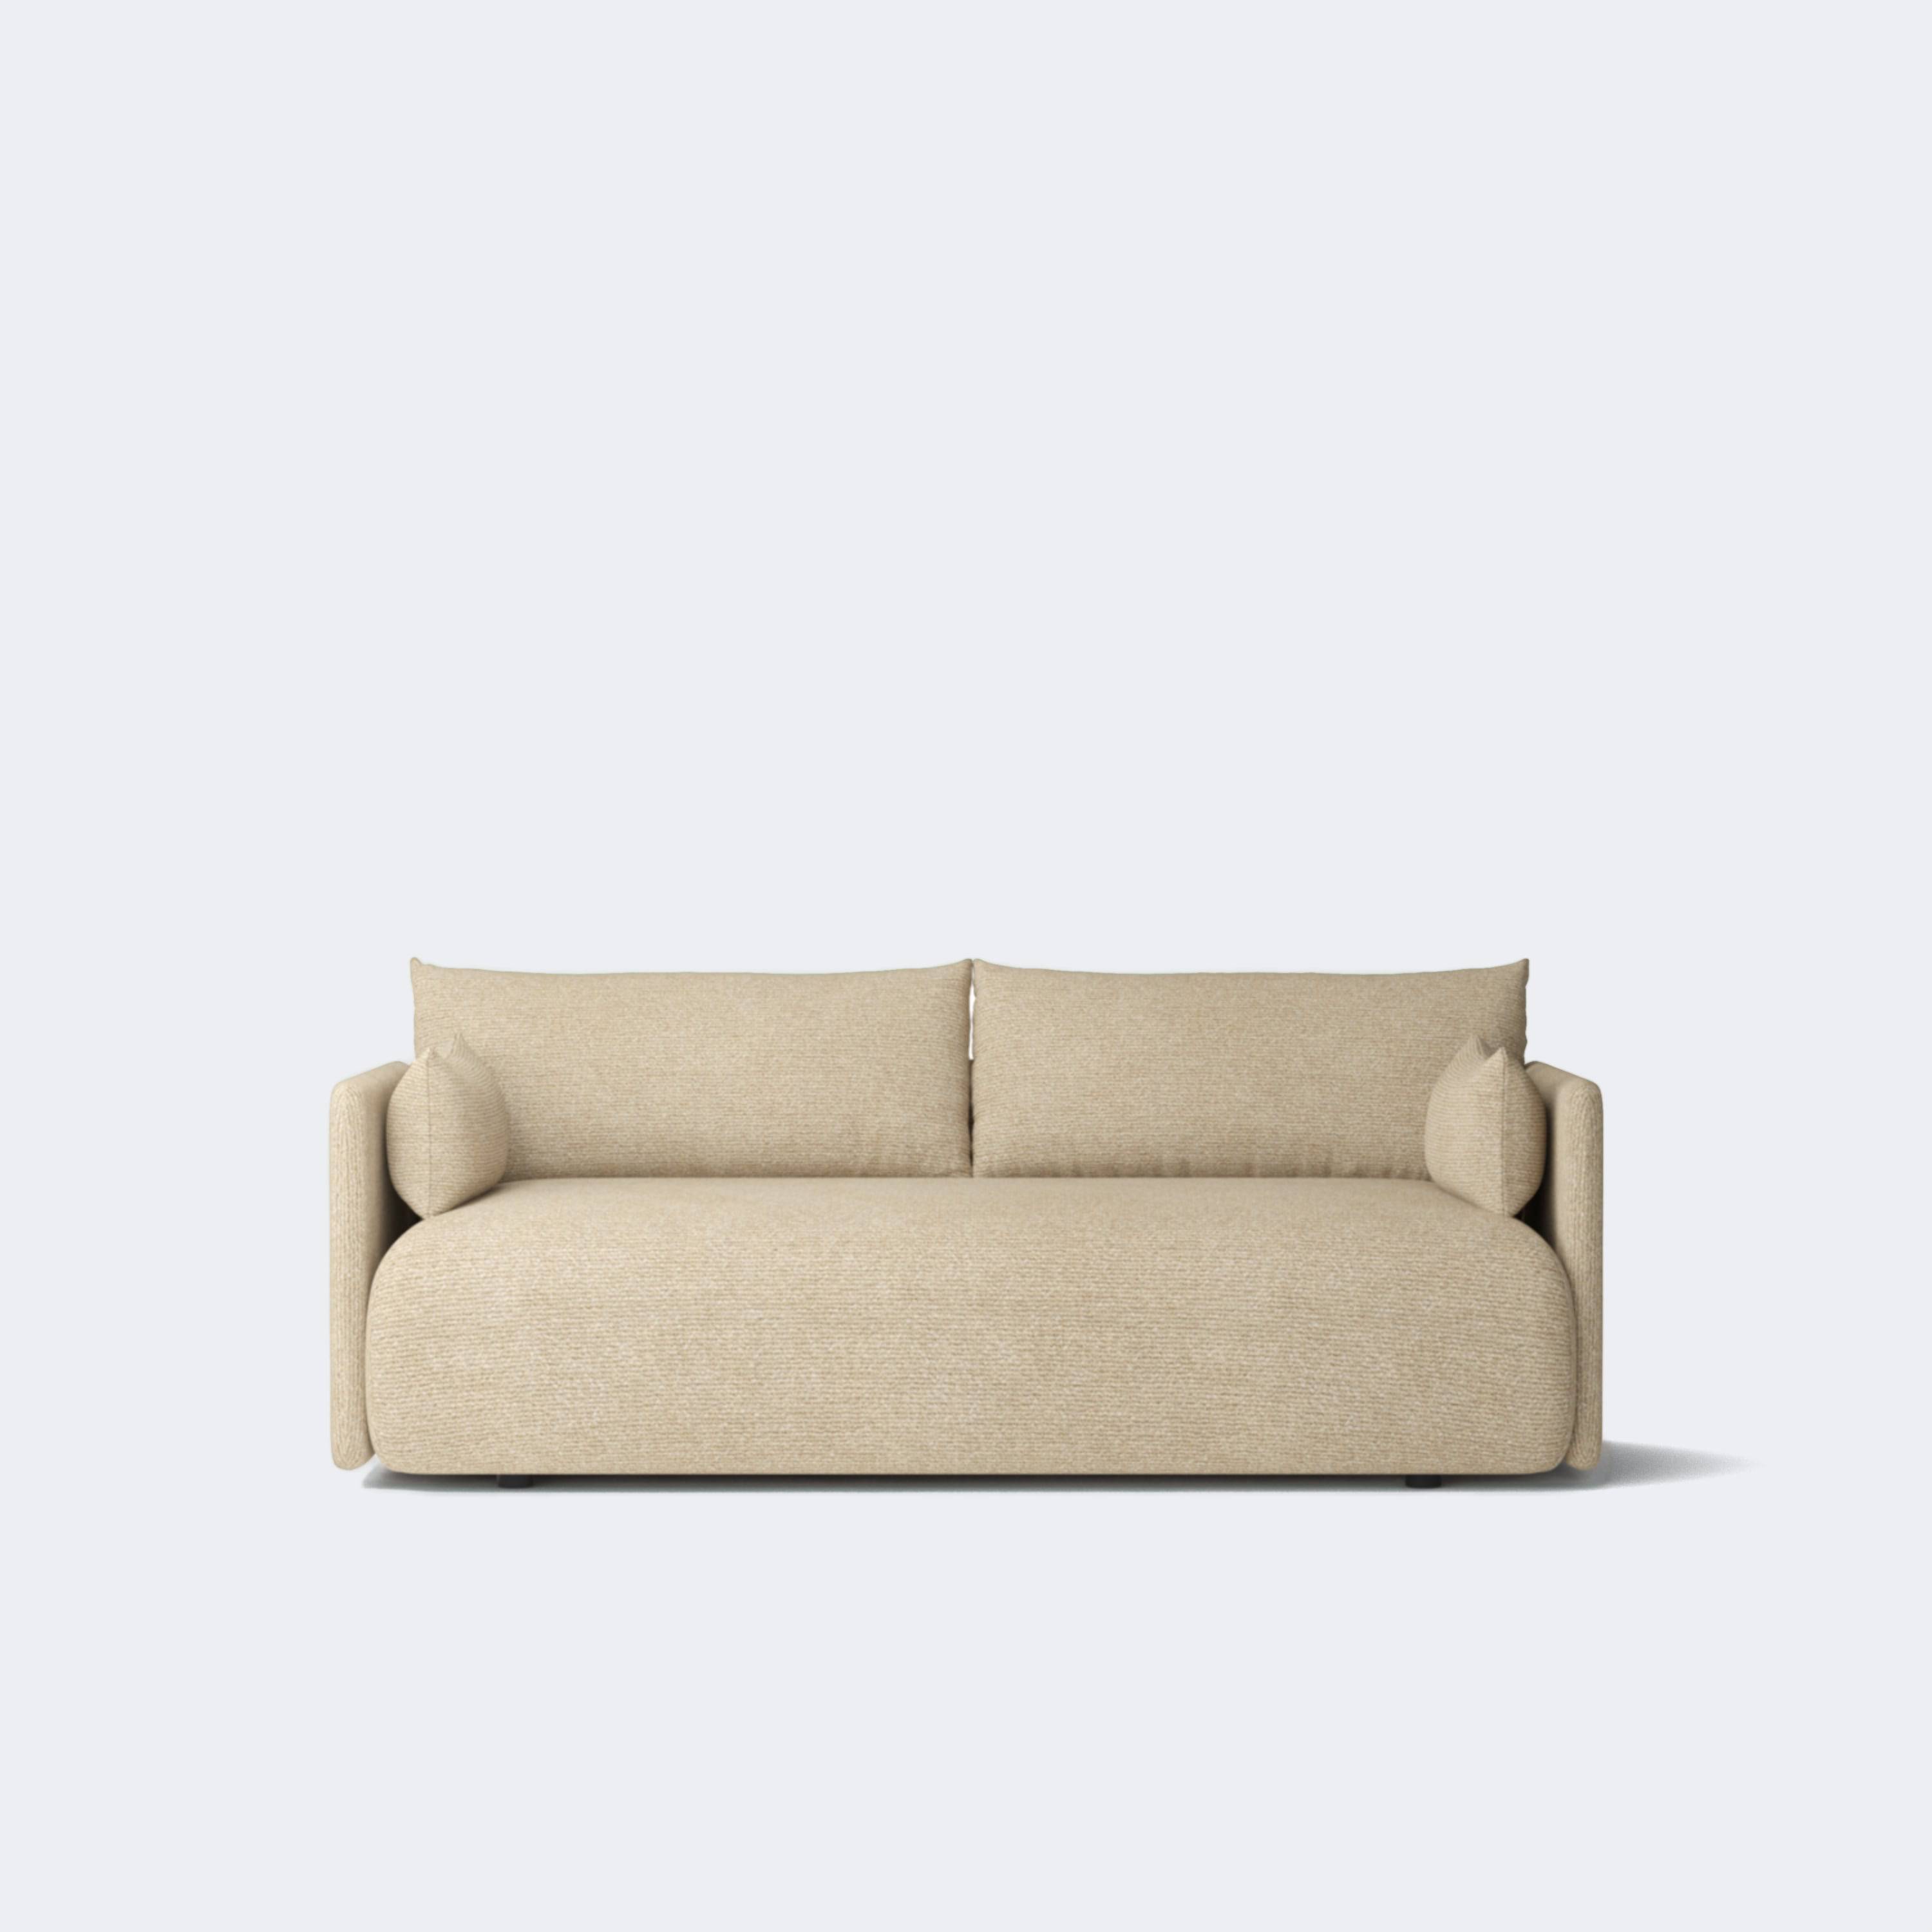 Audo Copenhagen Offset Sofa, 2 Seater Made To Order (12-14 Weeks) Savanna 202- KANSO#Fabric_Savanna 202